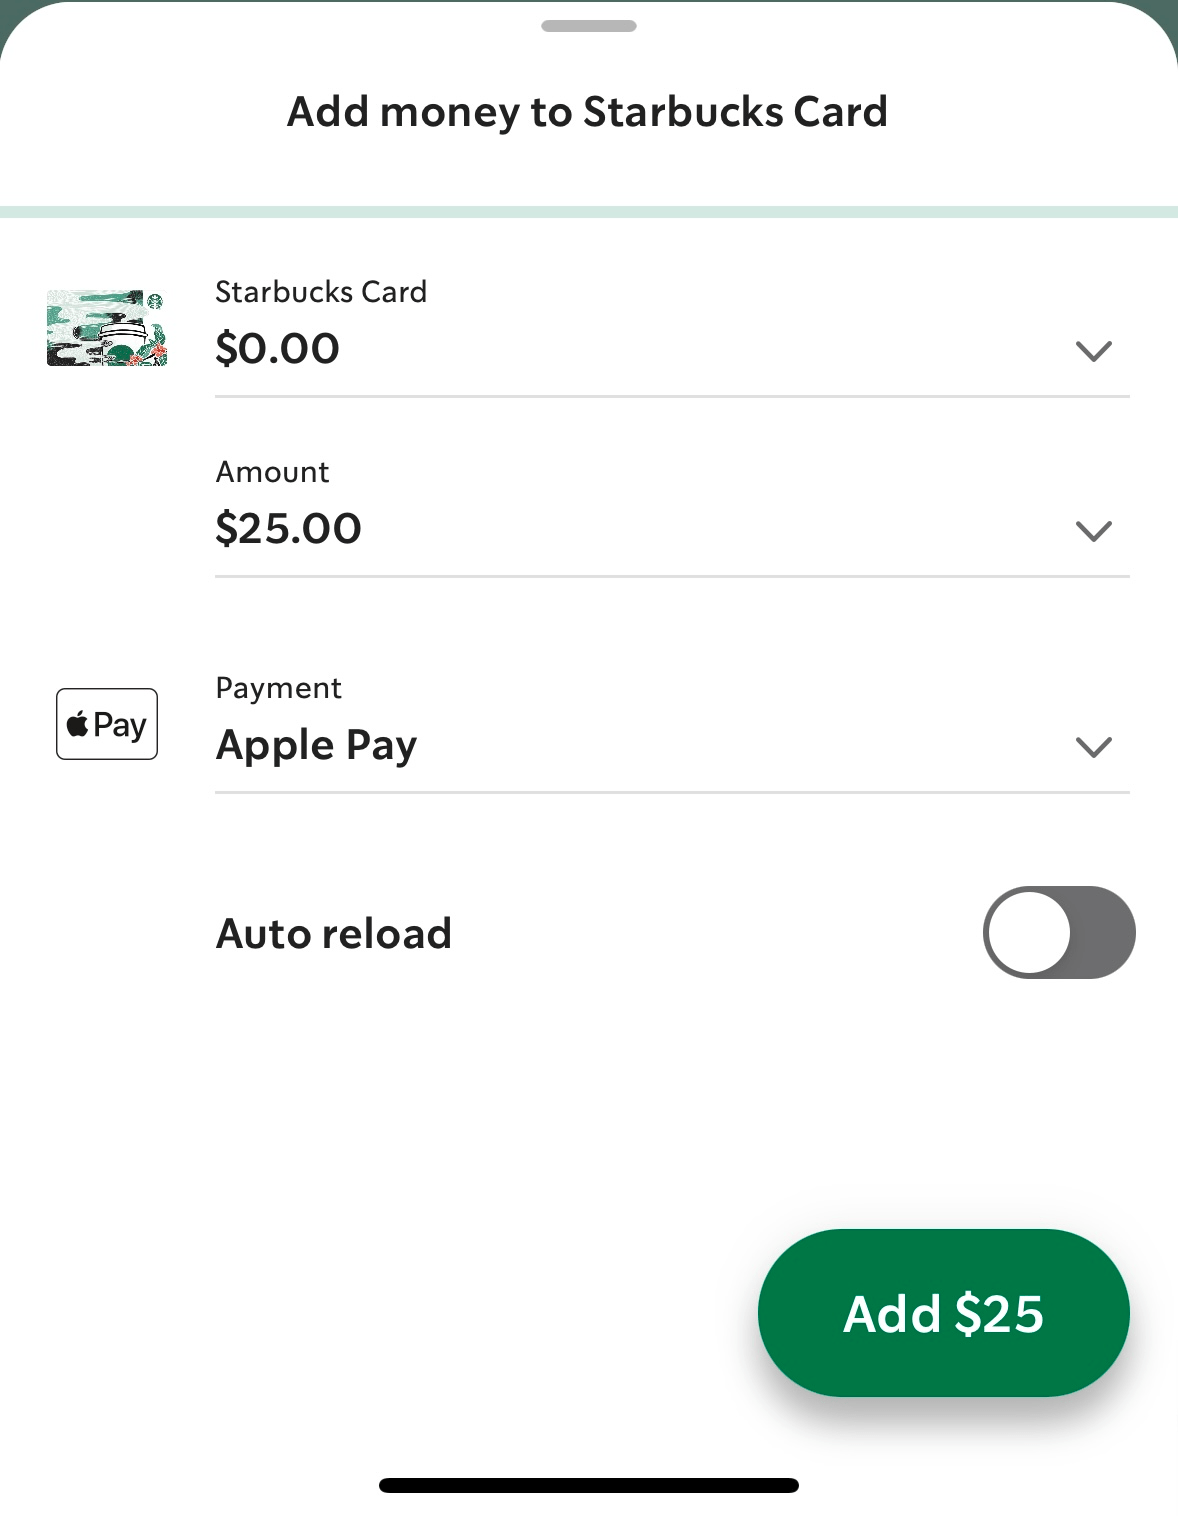 Add money to Starbucks Card screen